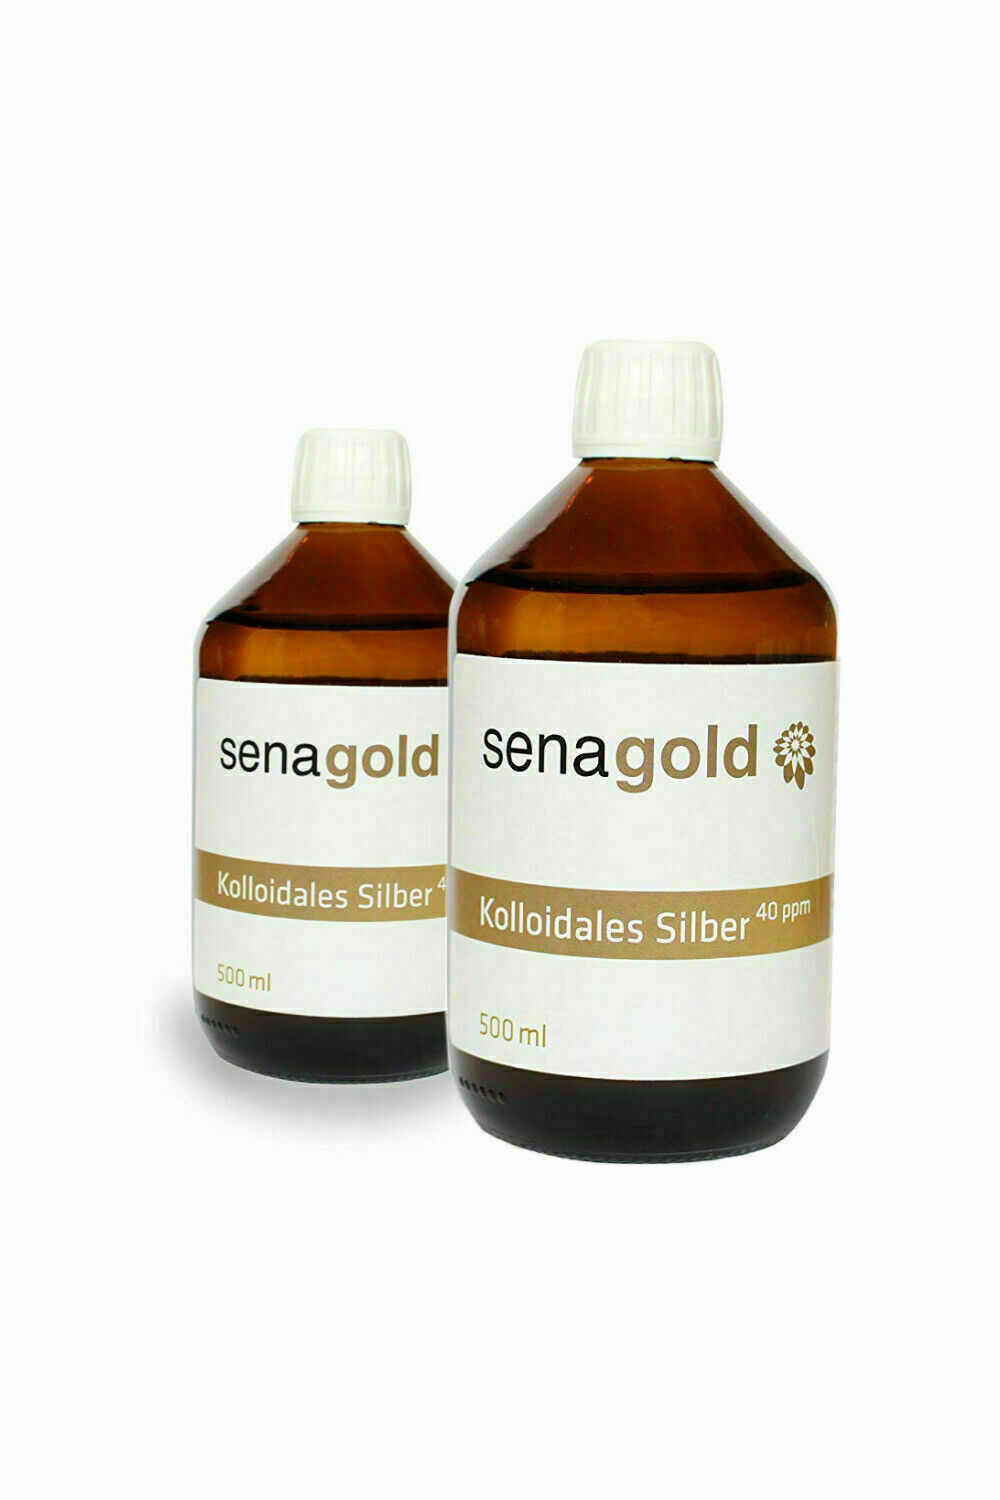 Kolloidales Silber 40 ppm - Senagold 